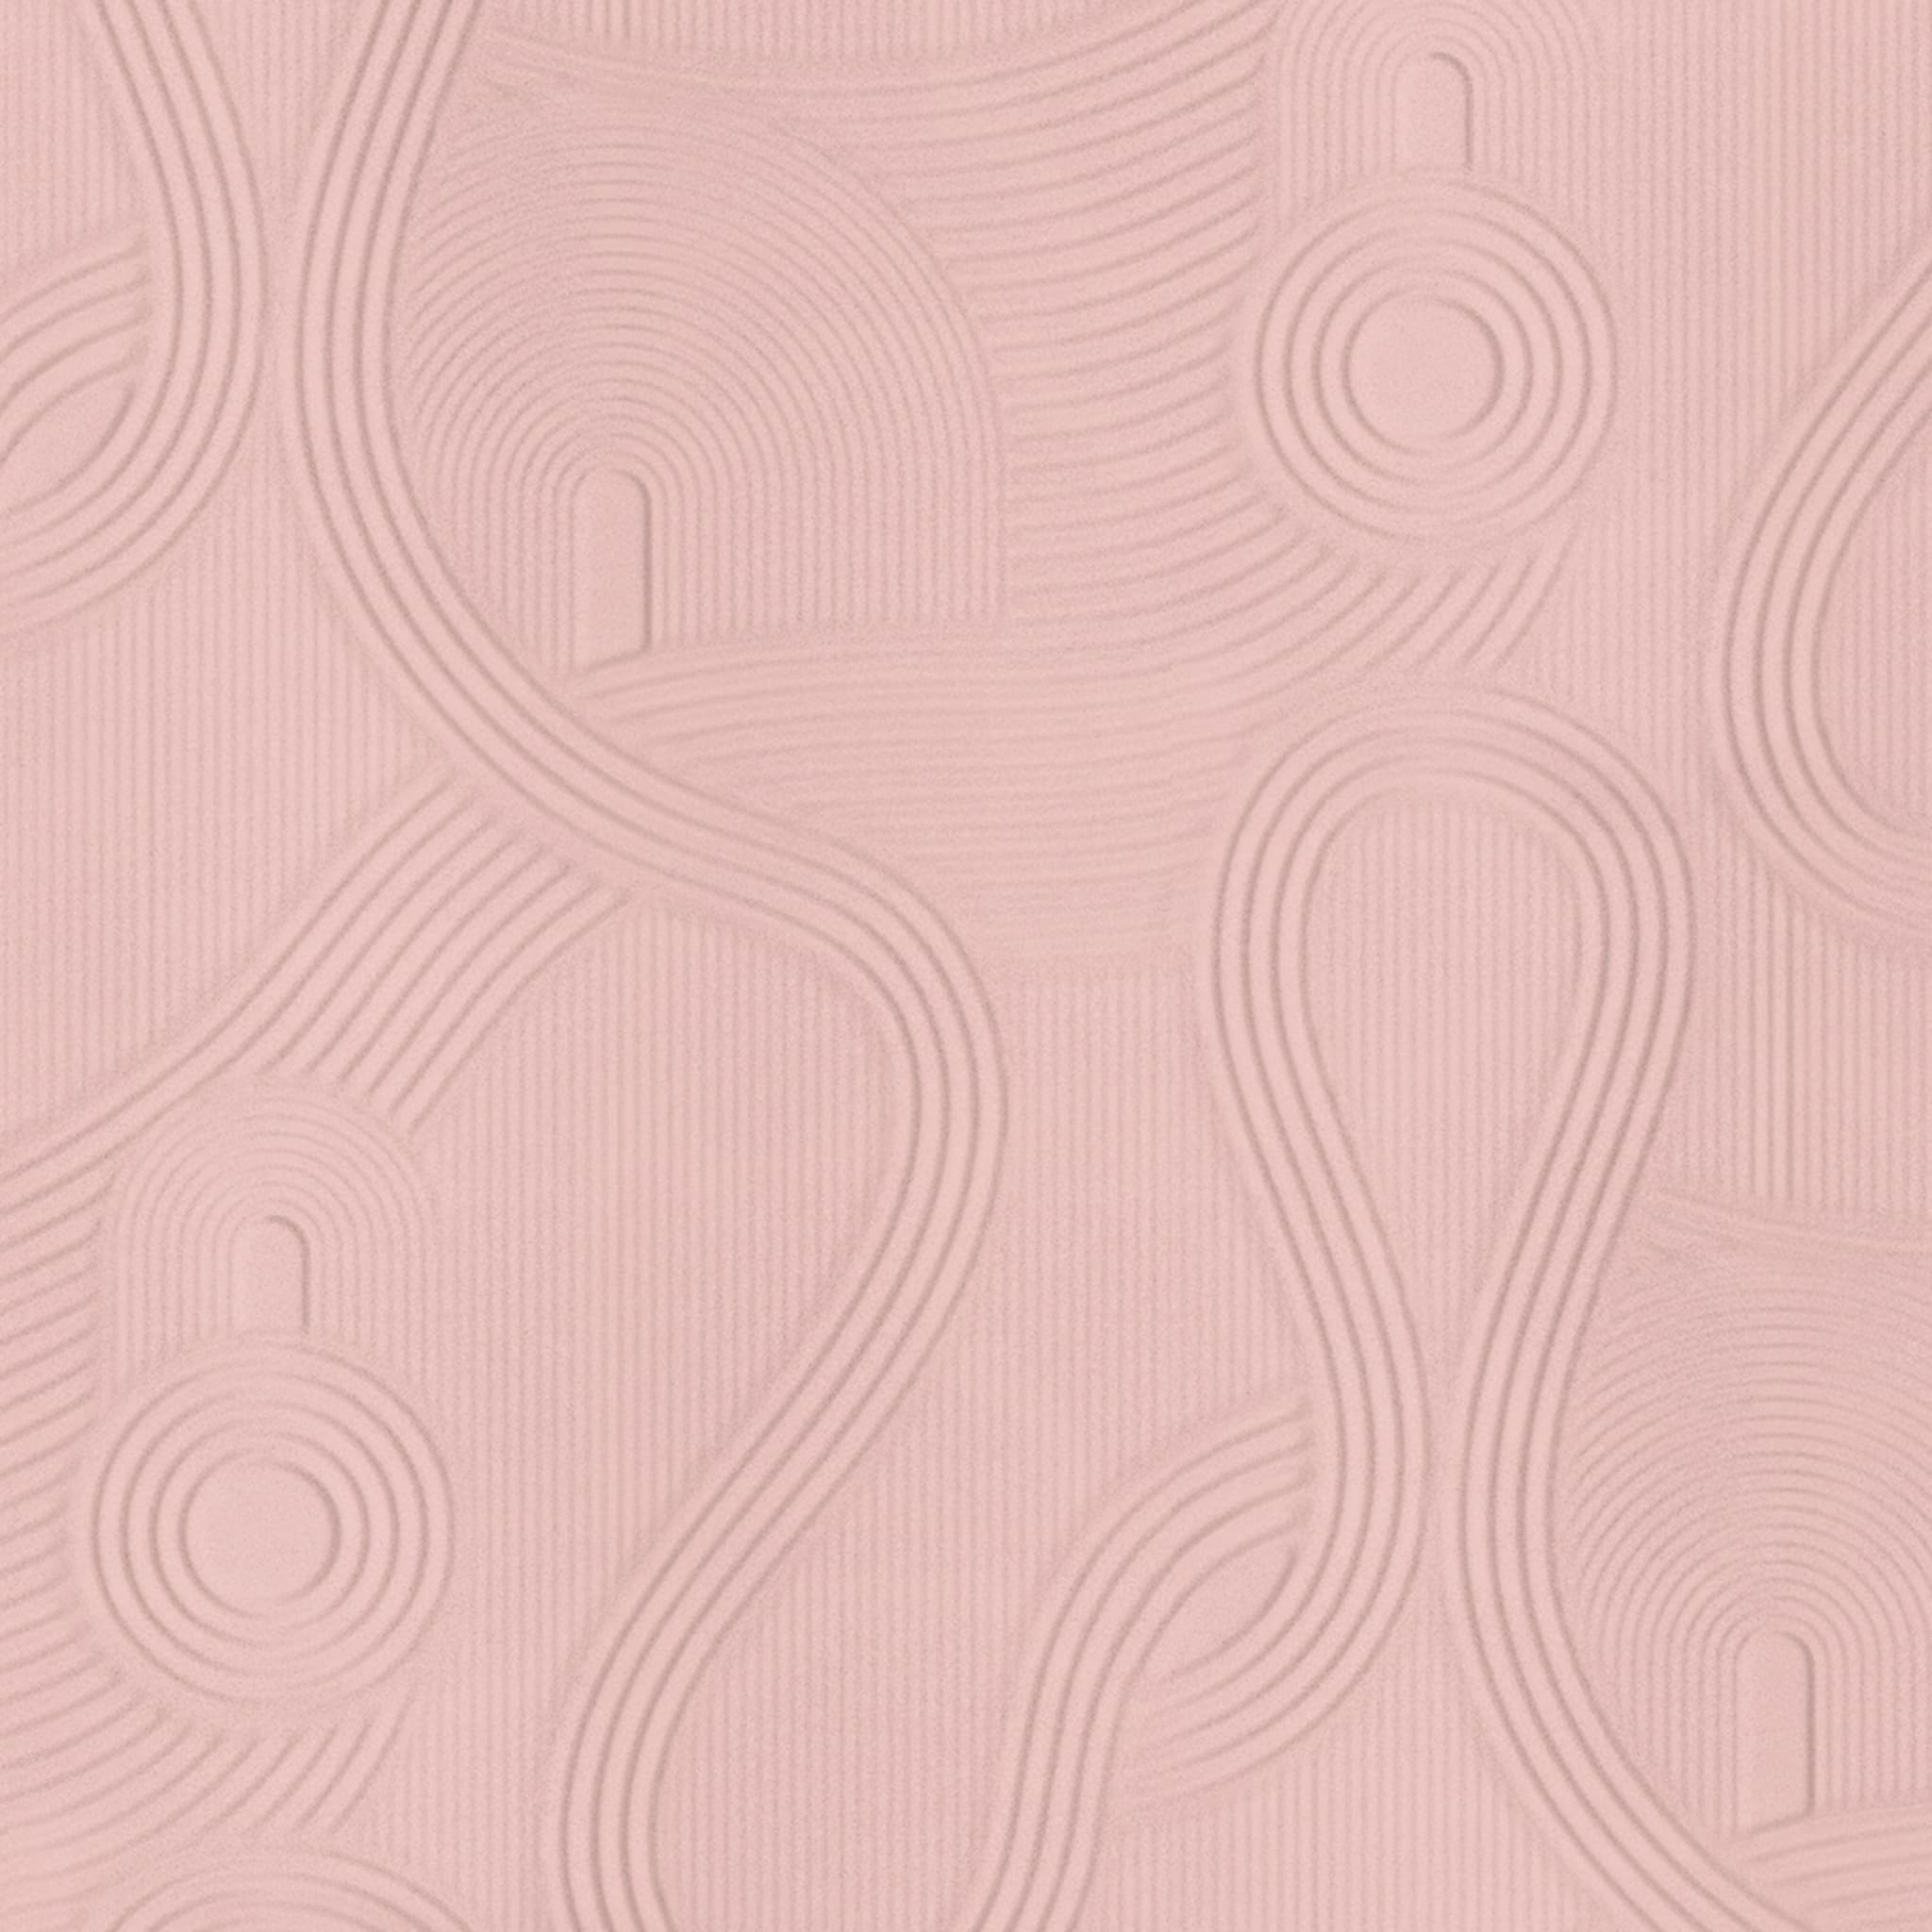 Papier peint rose zen - Vue alternative 1